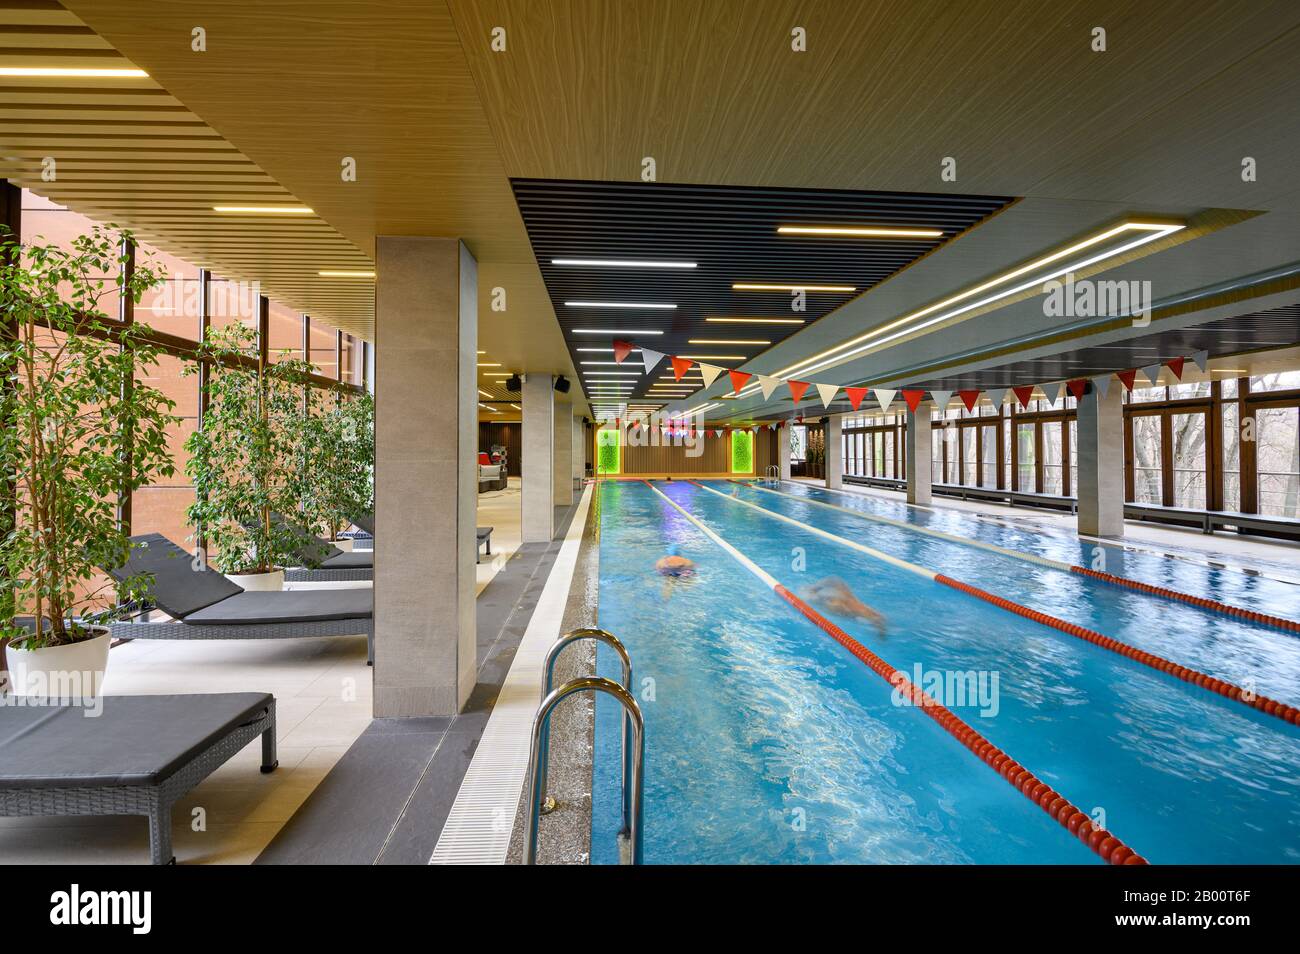 Luxury sportive indoor swimming pool with lanes interior Stock Photo